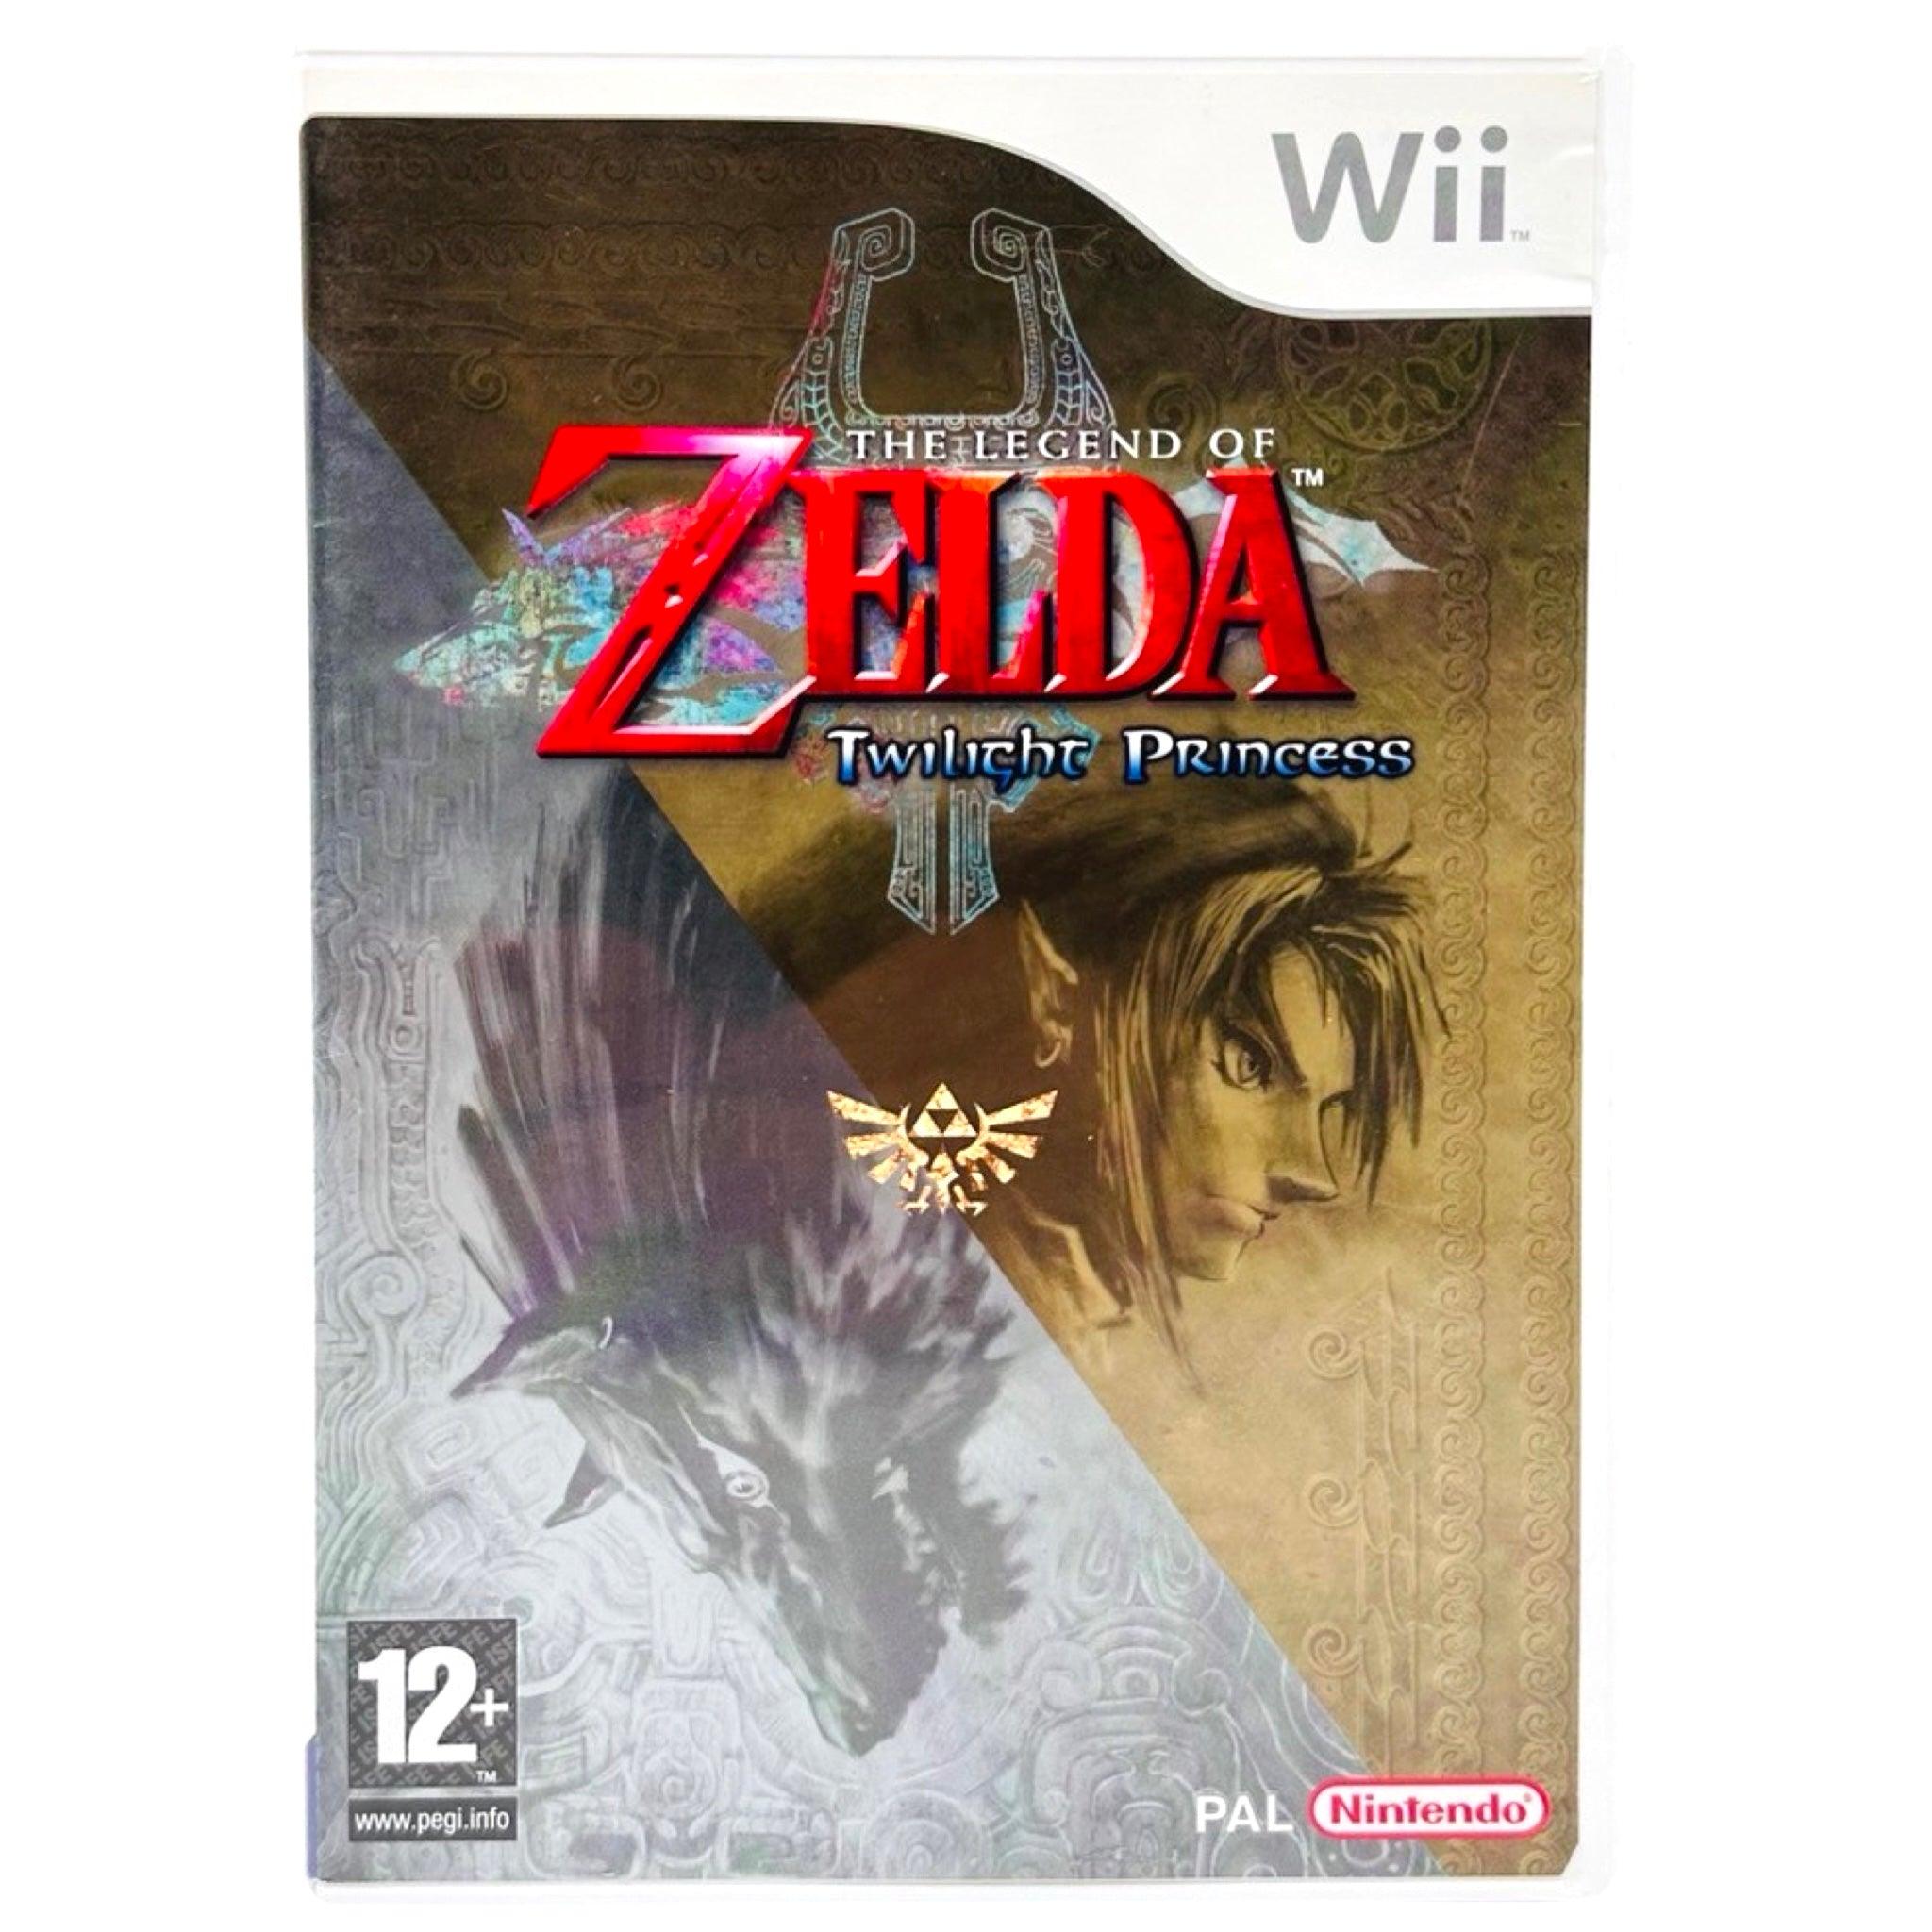 Wii: The Legend of Zelda: Twilight Princess - RetroGaming.no